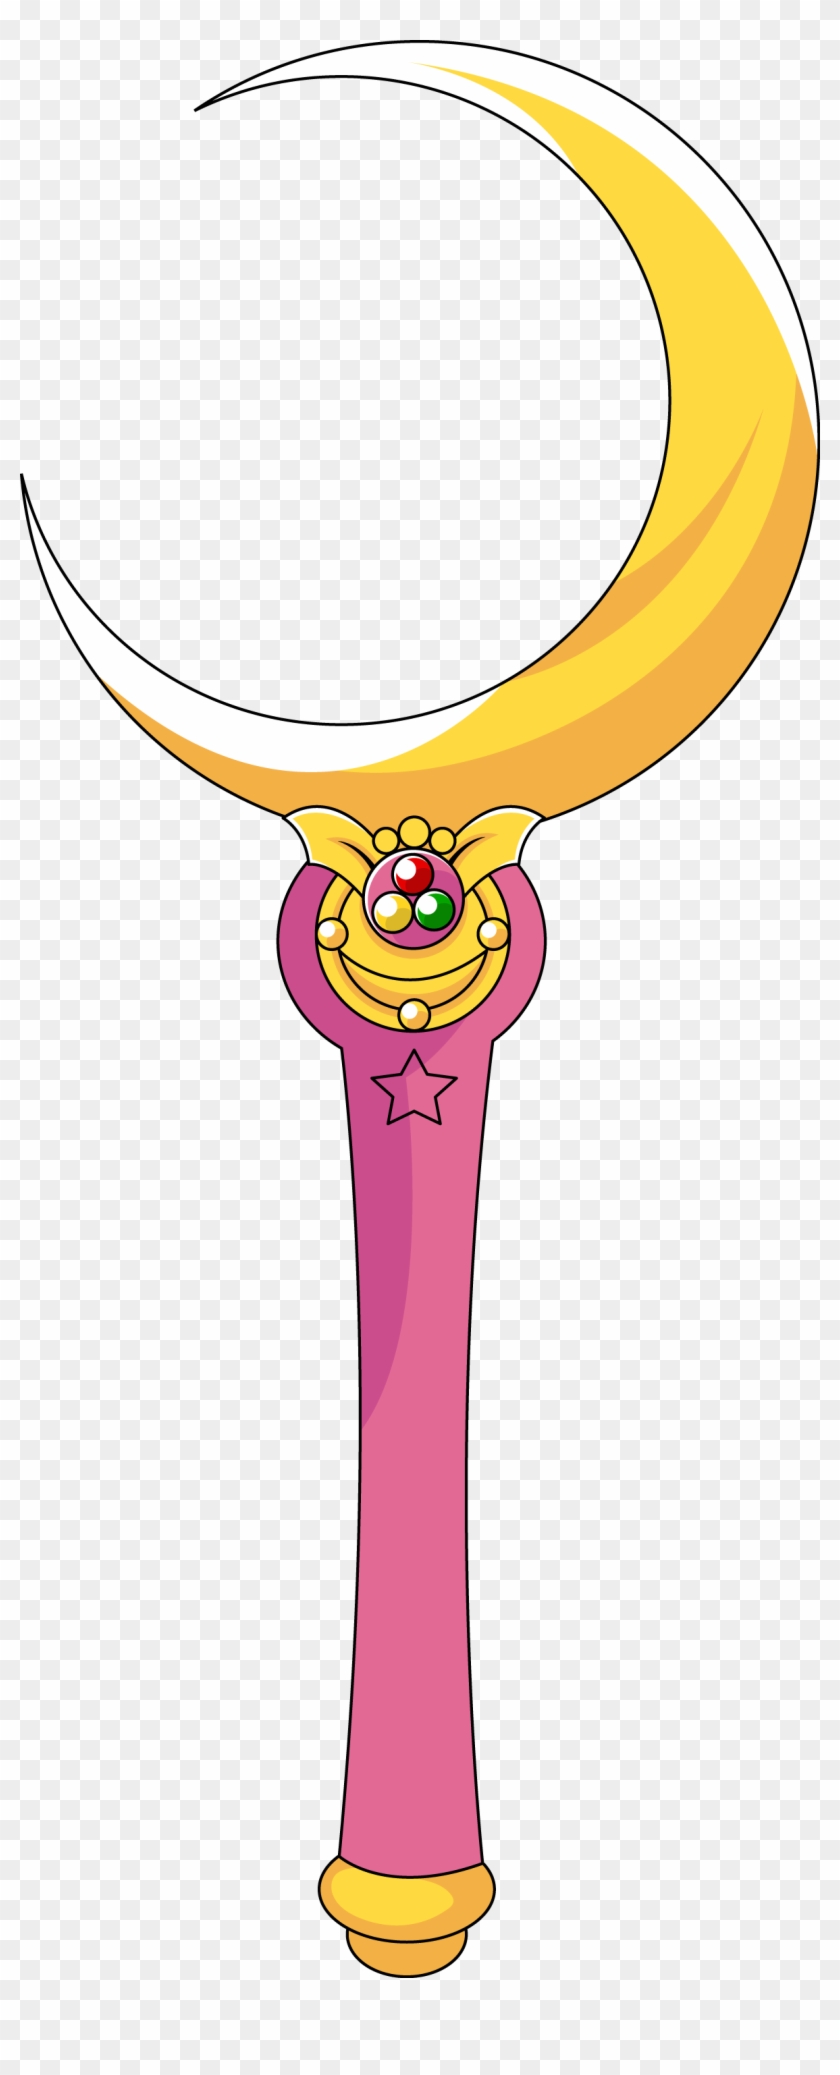 Moon Stick Vector - Sailor Moon Moon Stick Png #269901